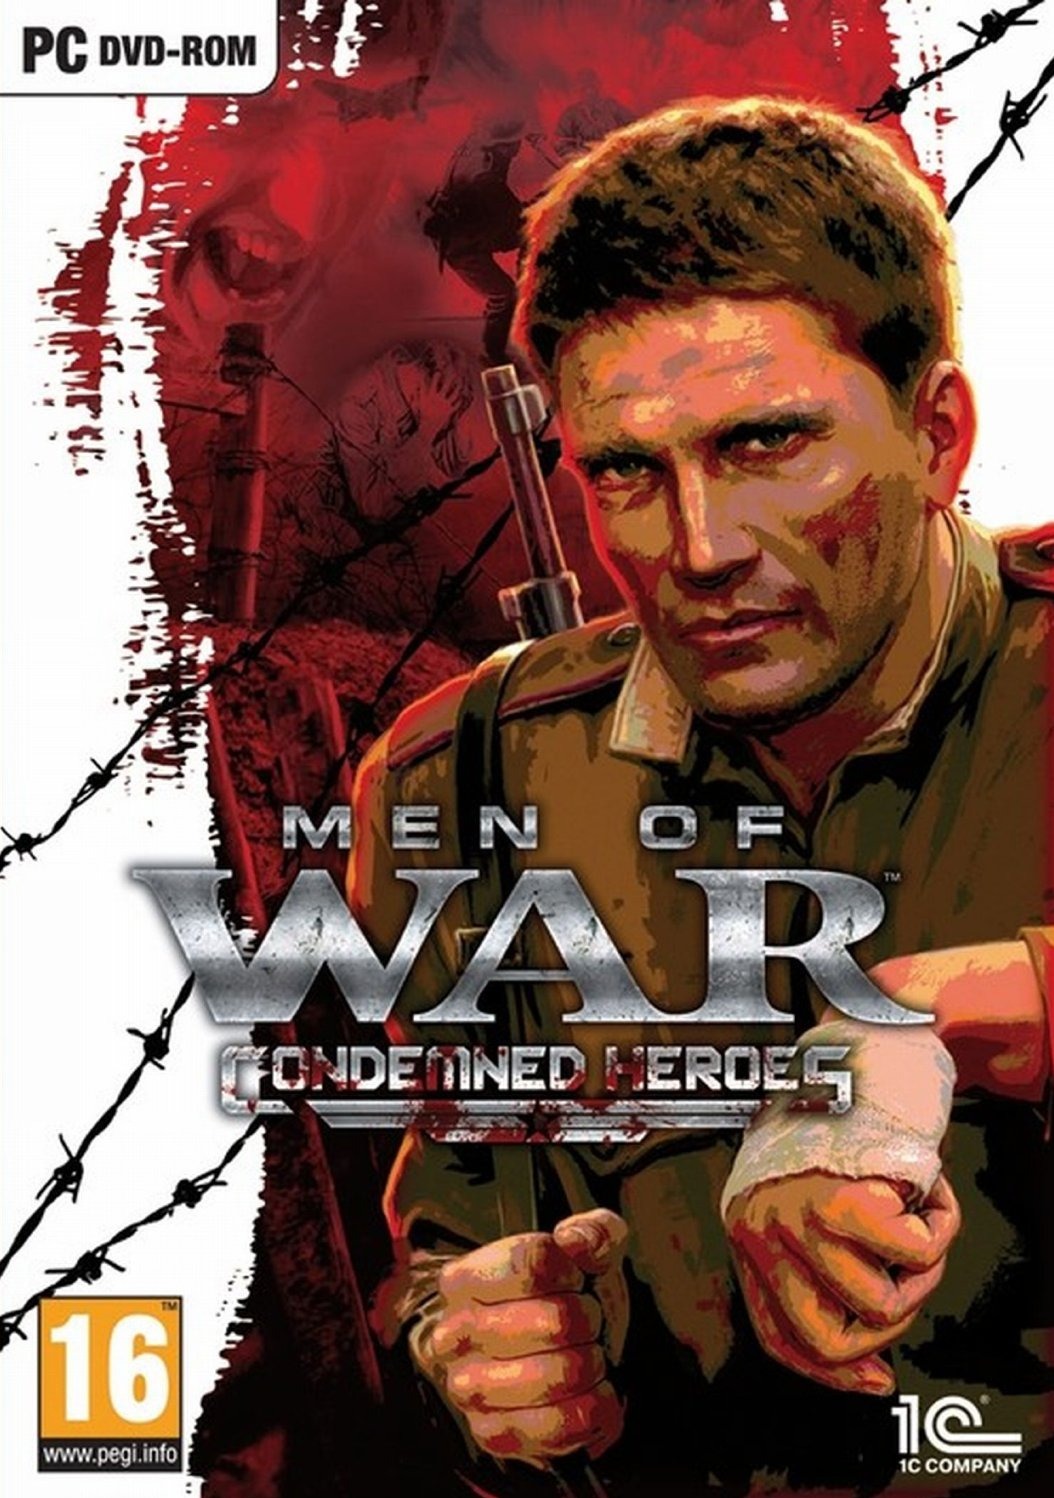 jaquette du jeu vidéo Men of War : Condemned Heroes